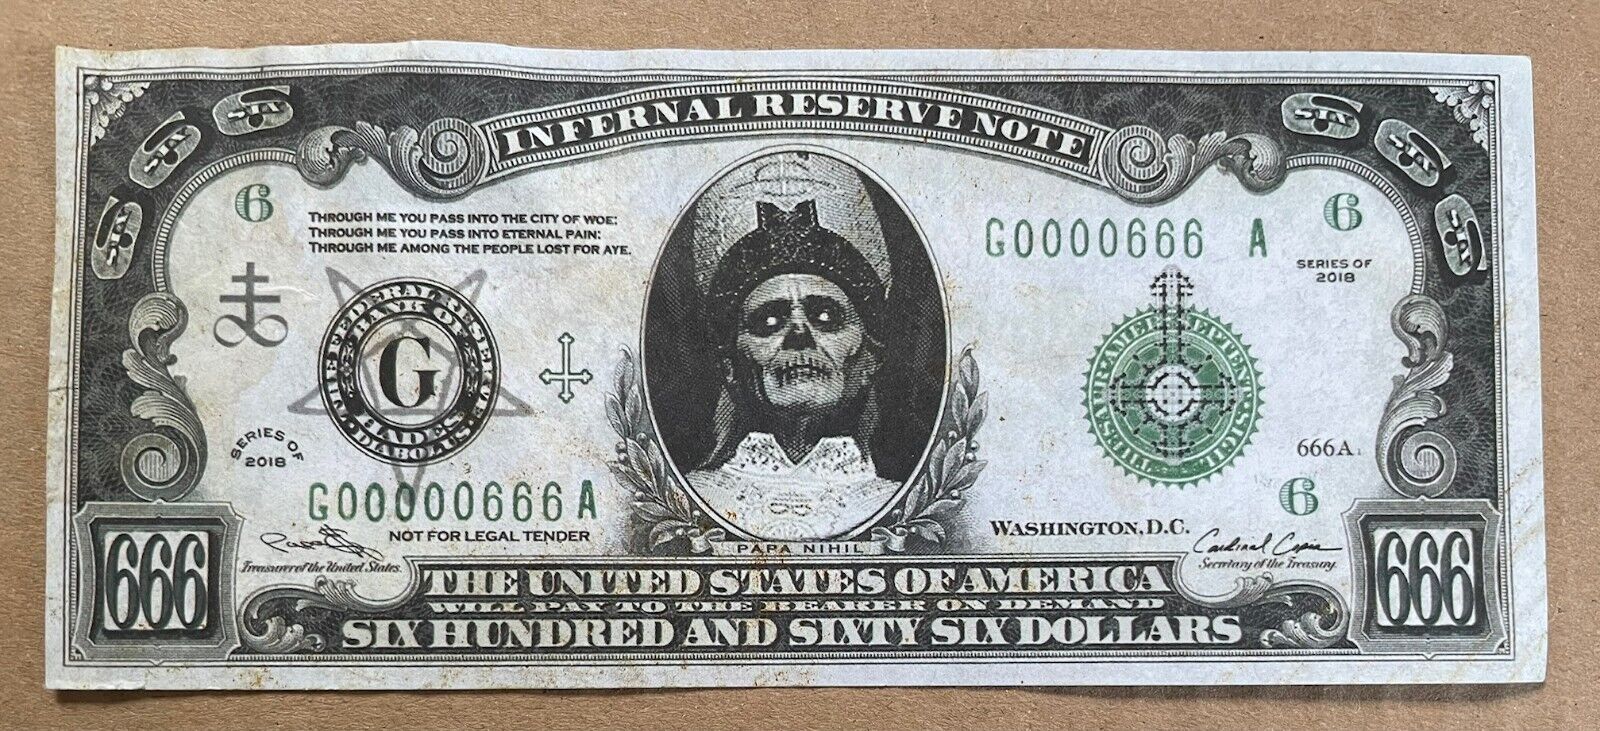 Ghost - Prequelle Tour Mummy Dust / Dollar Bill - Papa Nihil -  Emeritus Copia